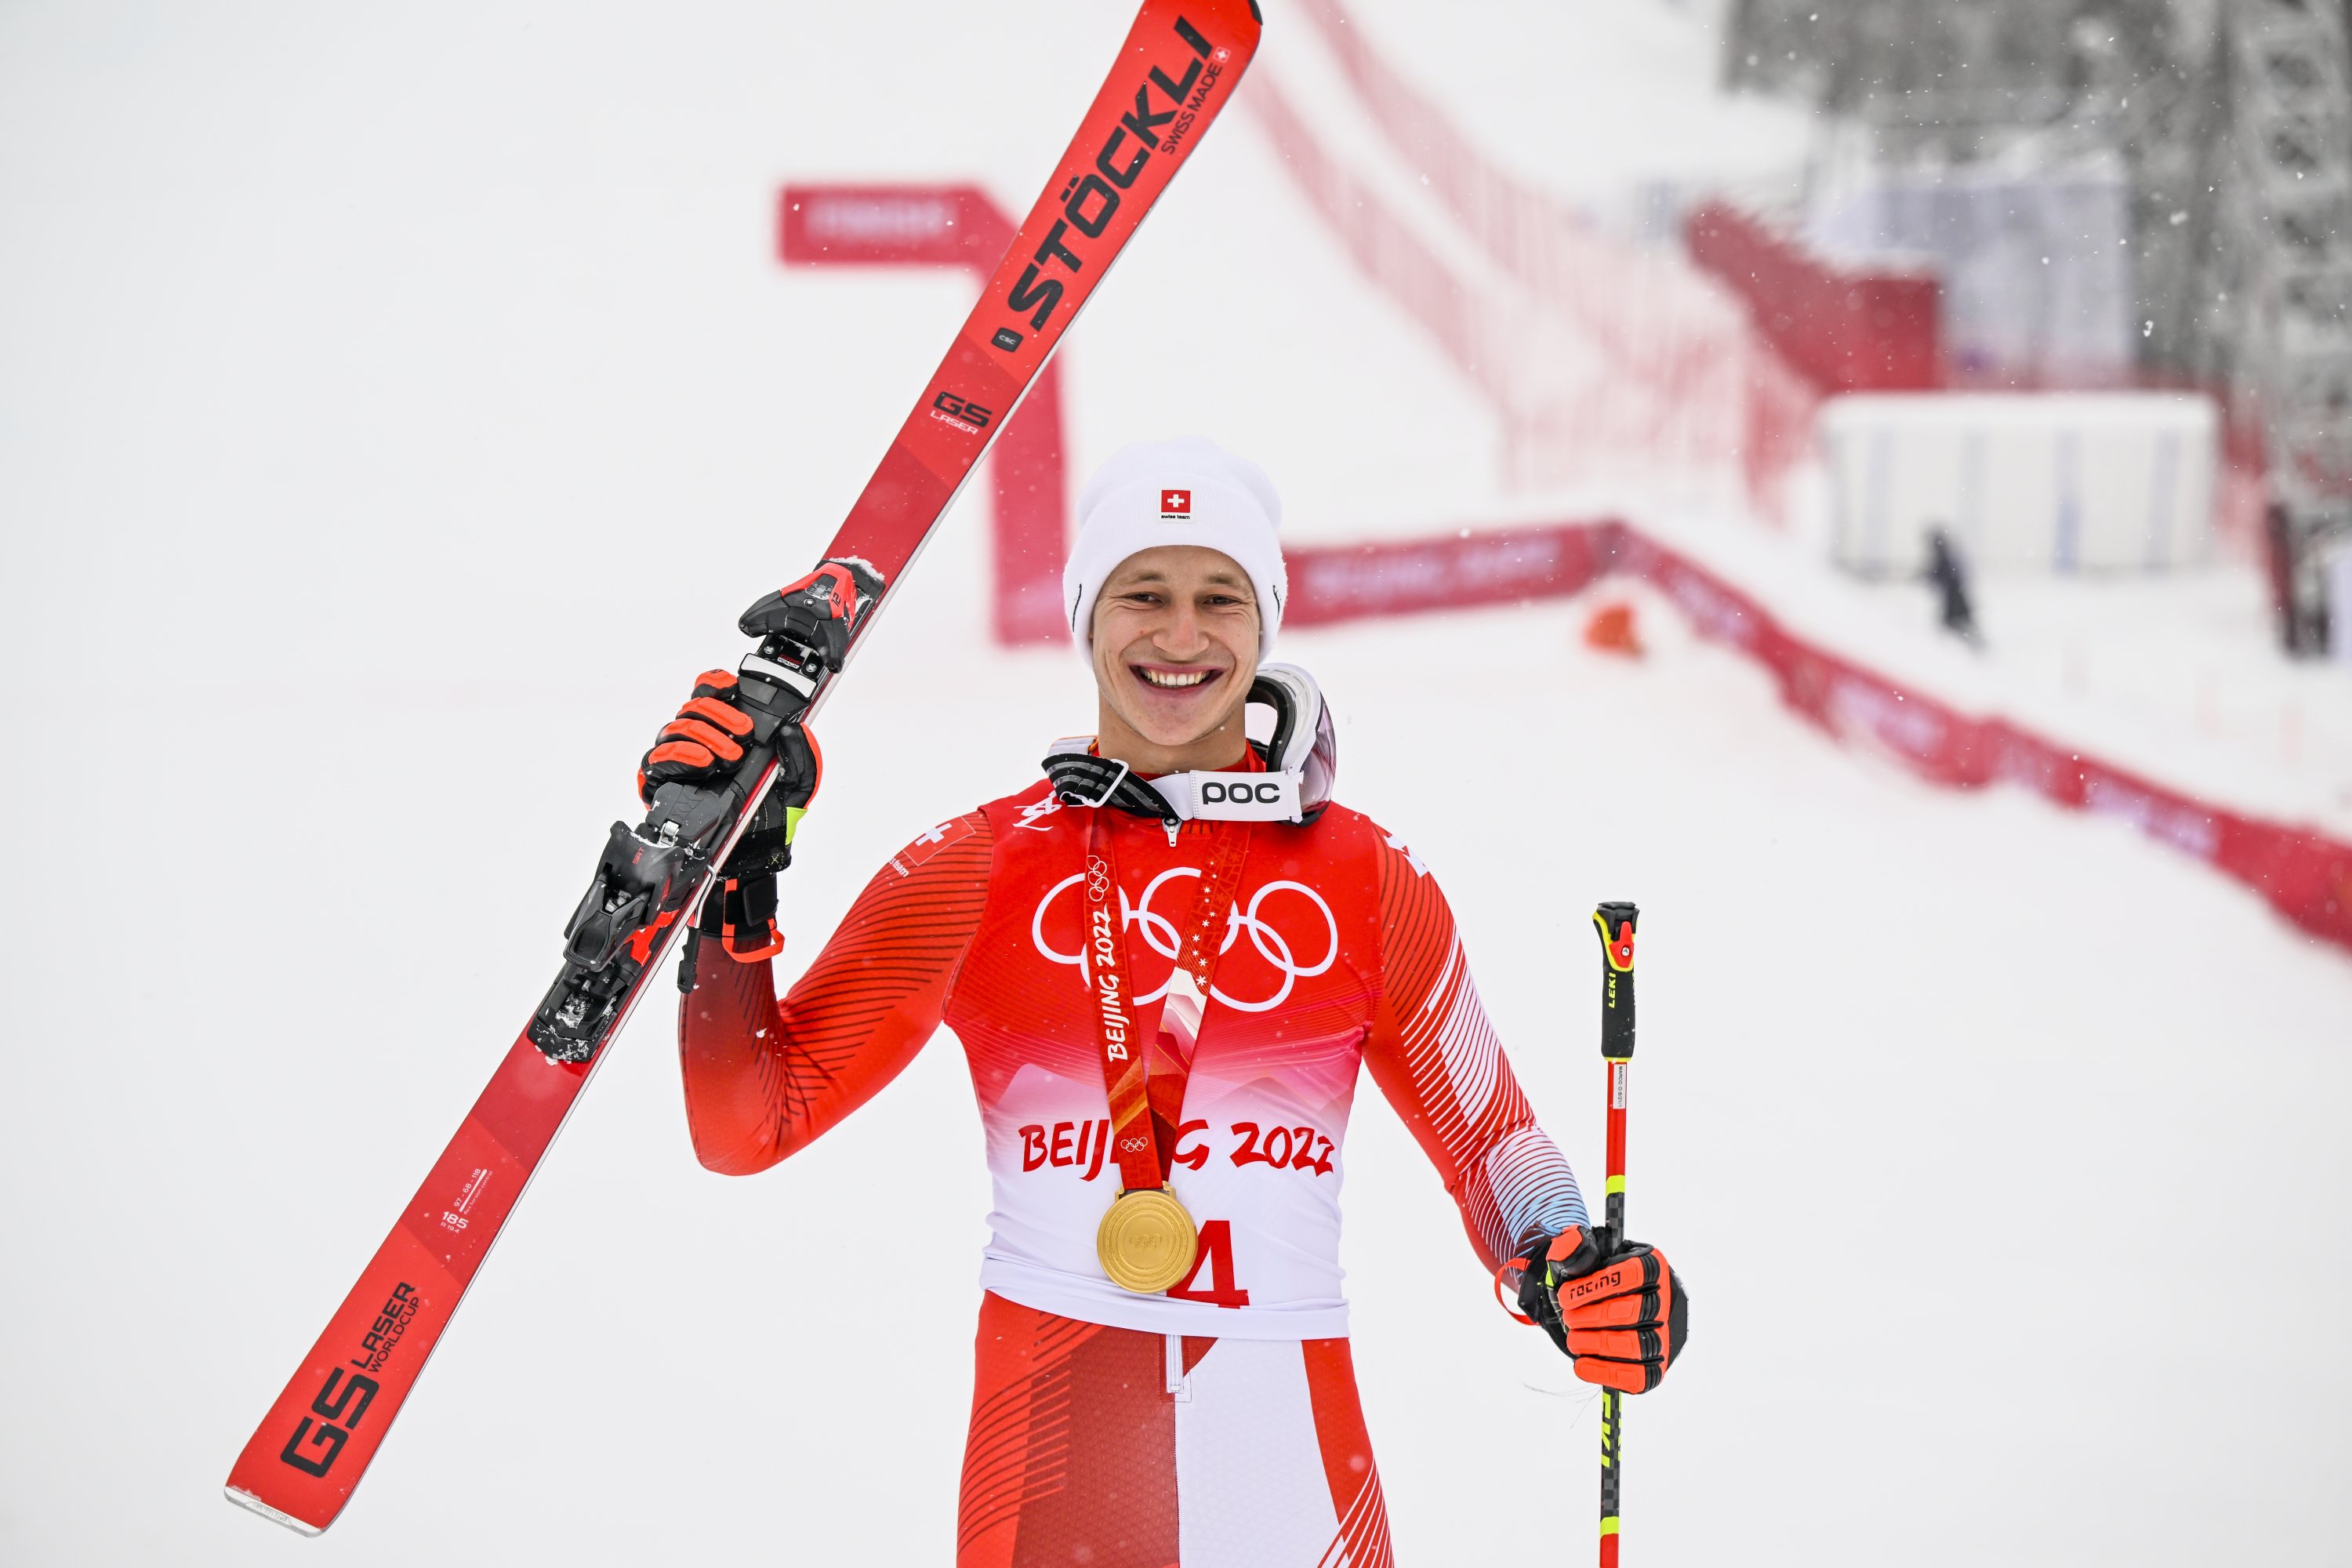 Switzerland's Marco Odermatt celebrates winning gold in the 2022 Olympic Winter Games men's Alpine Skiing giant slalom race, Yanqing, China, Feb. 13, 2022. (EPA Photo)